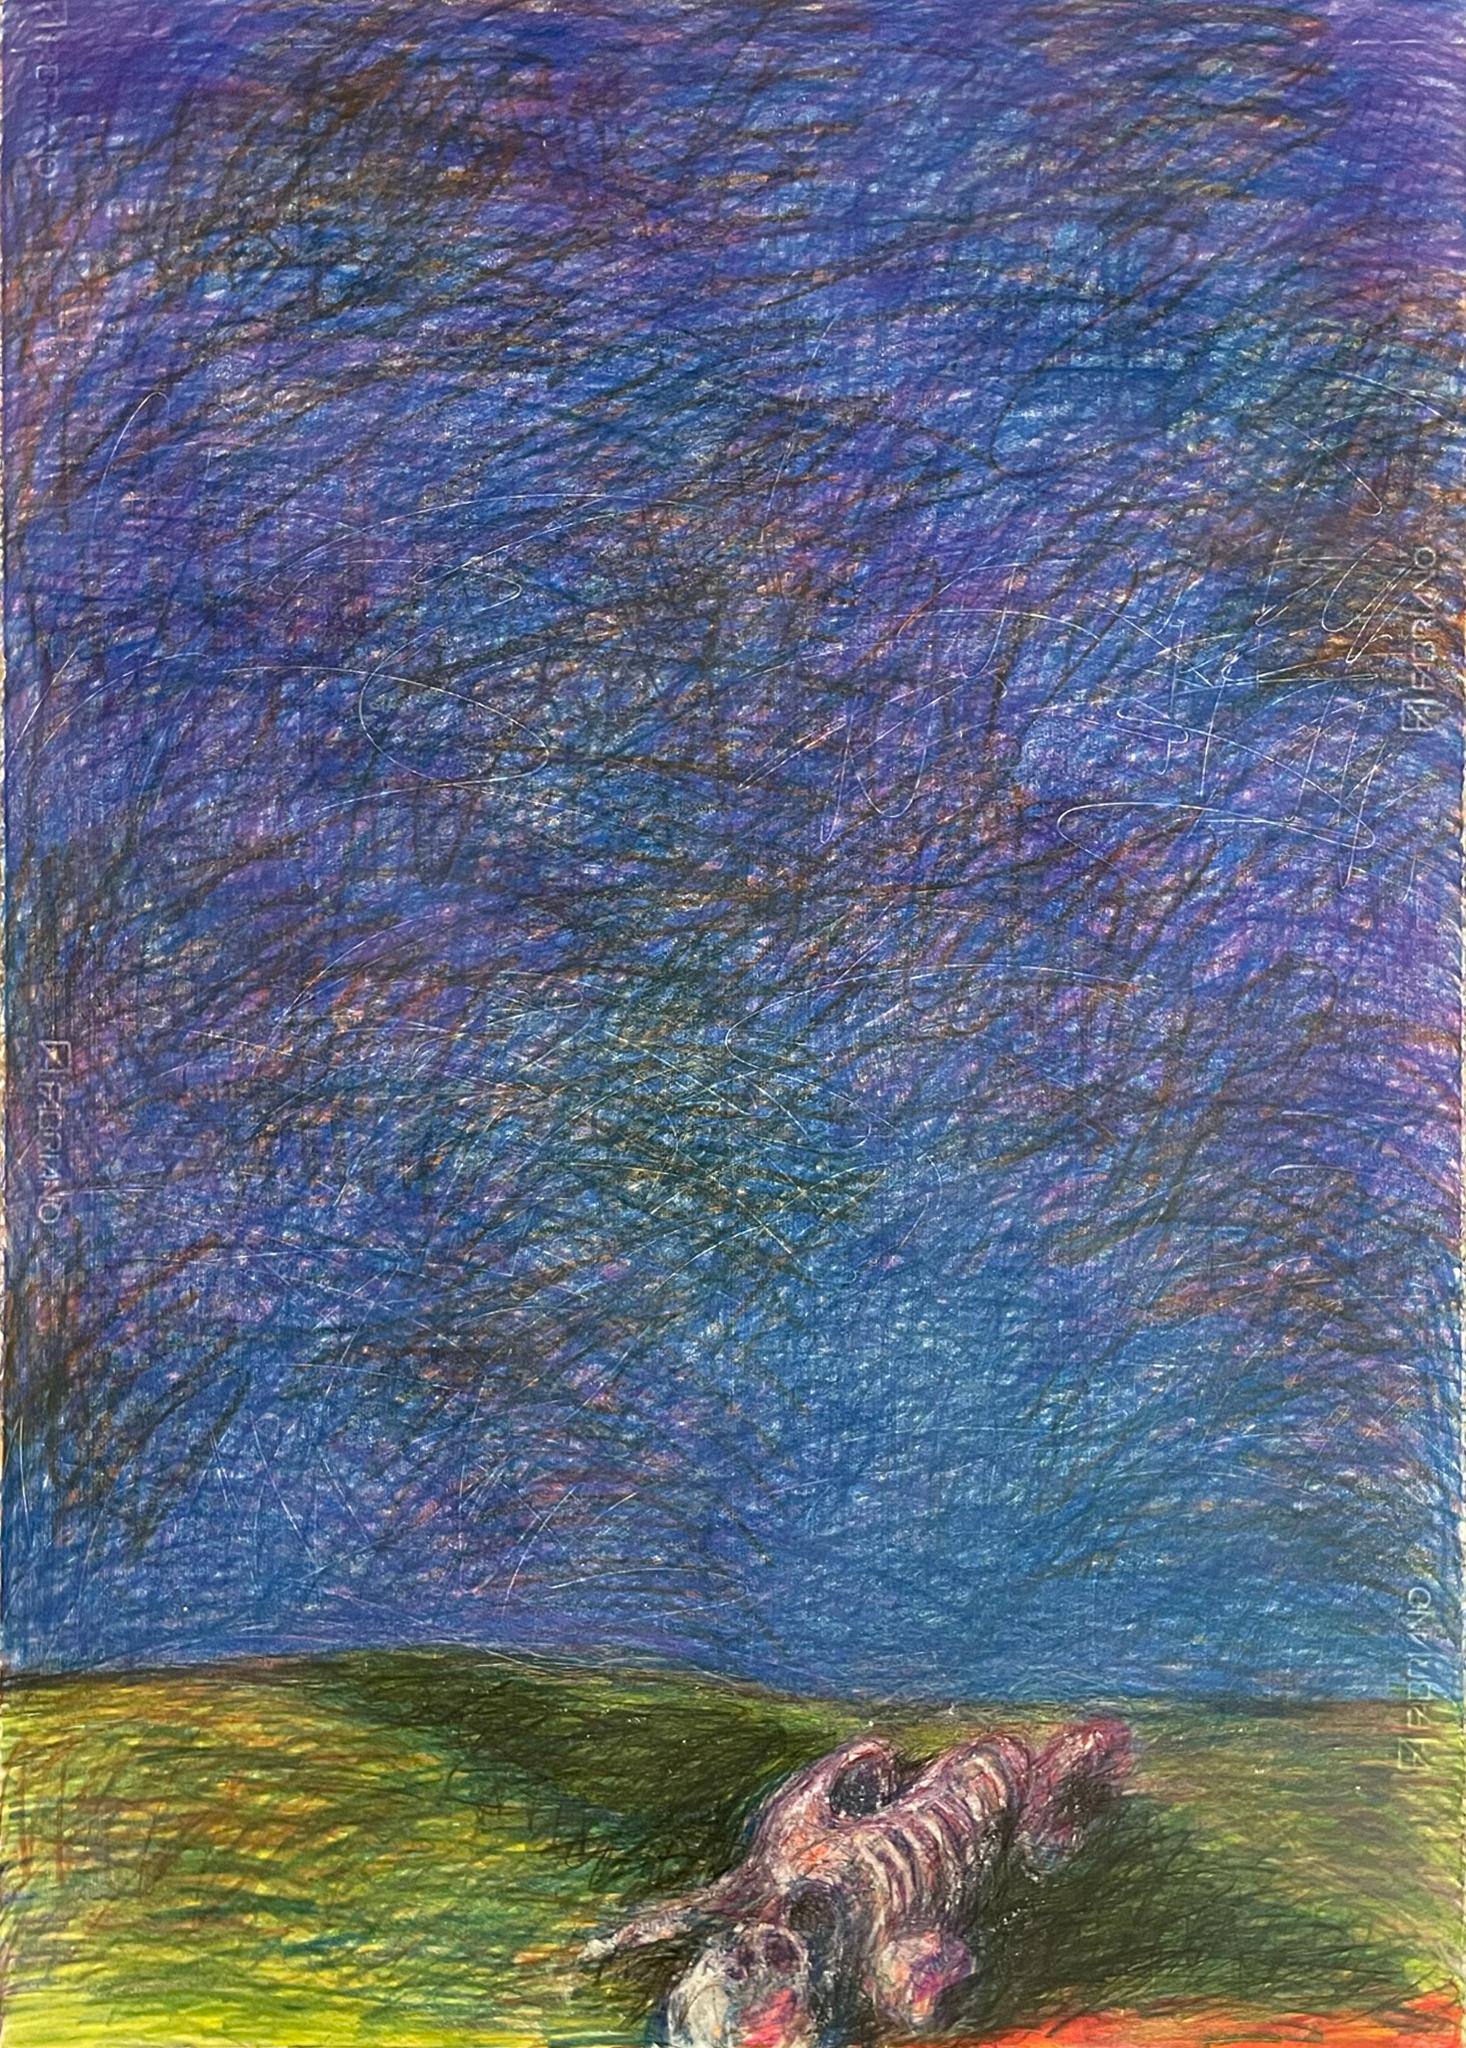 Zsolt Berszán Figurative Art - Untitled_Body on the Field #8 - 21st Century, Drawing, Blue, Green, Yellow